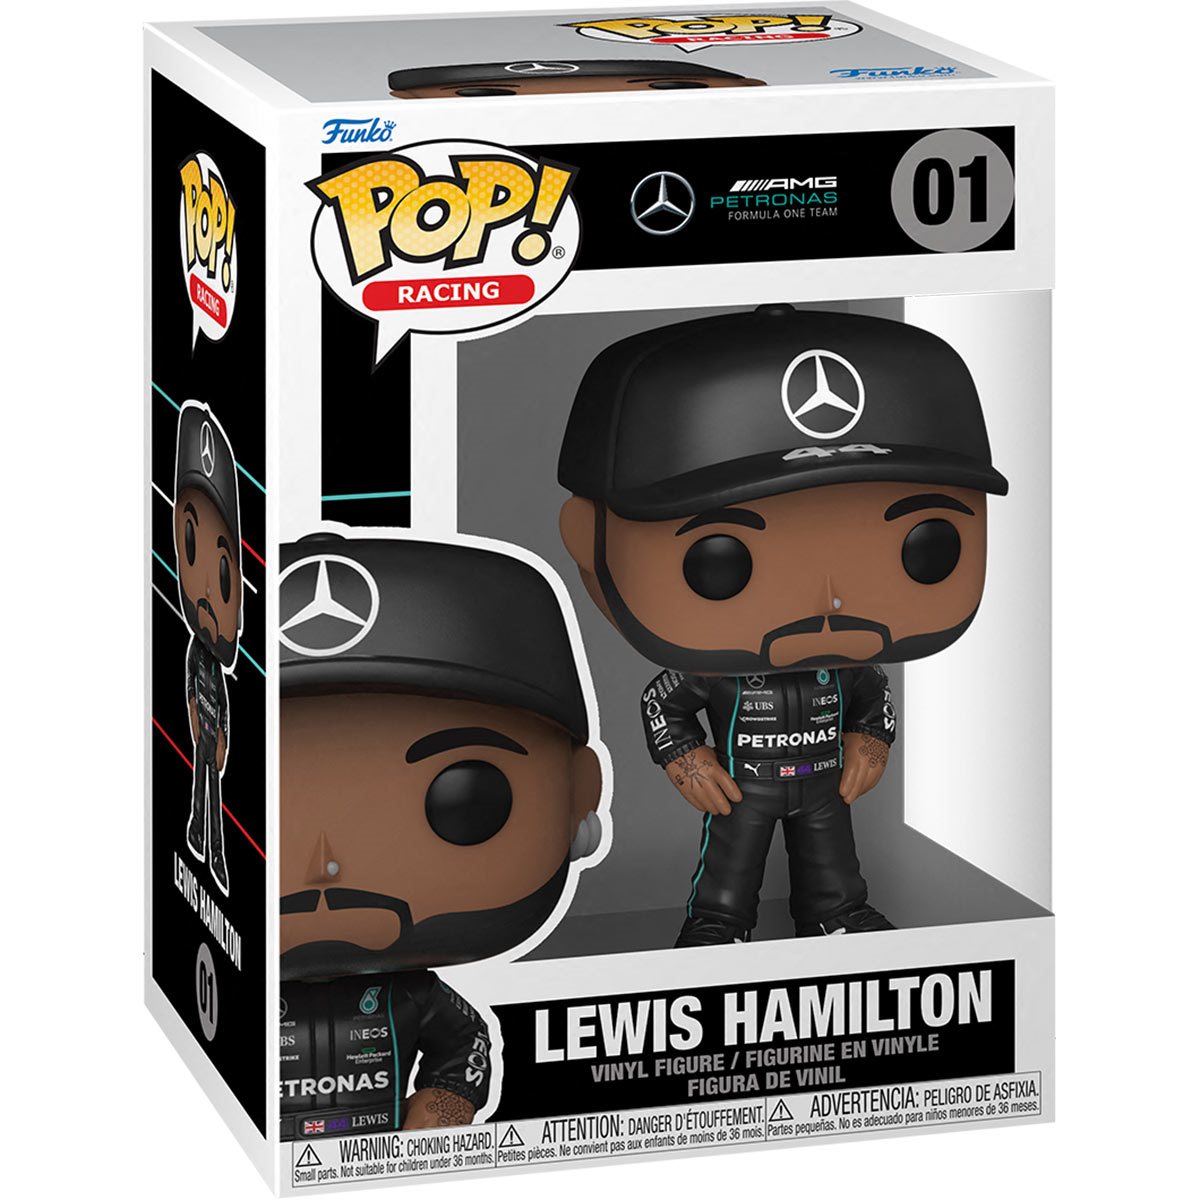 Lewis Hamilton 01 - Funko Pop! Racing